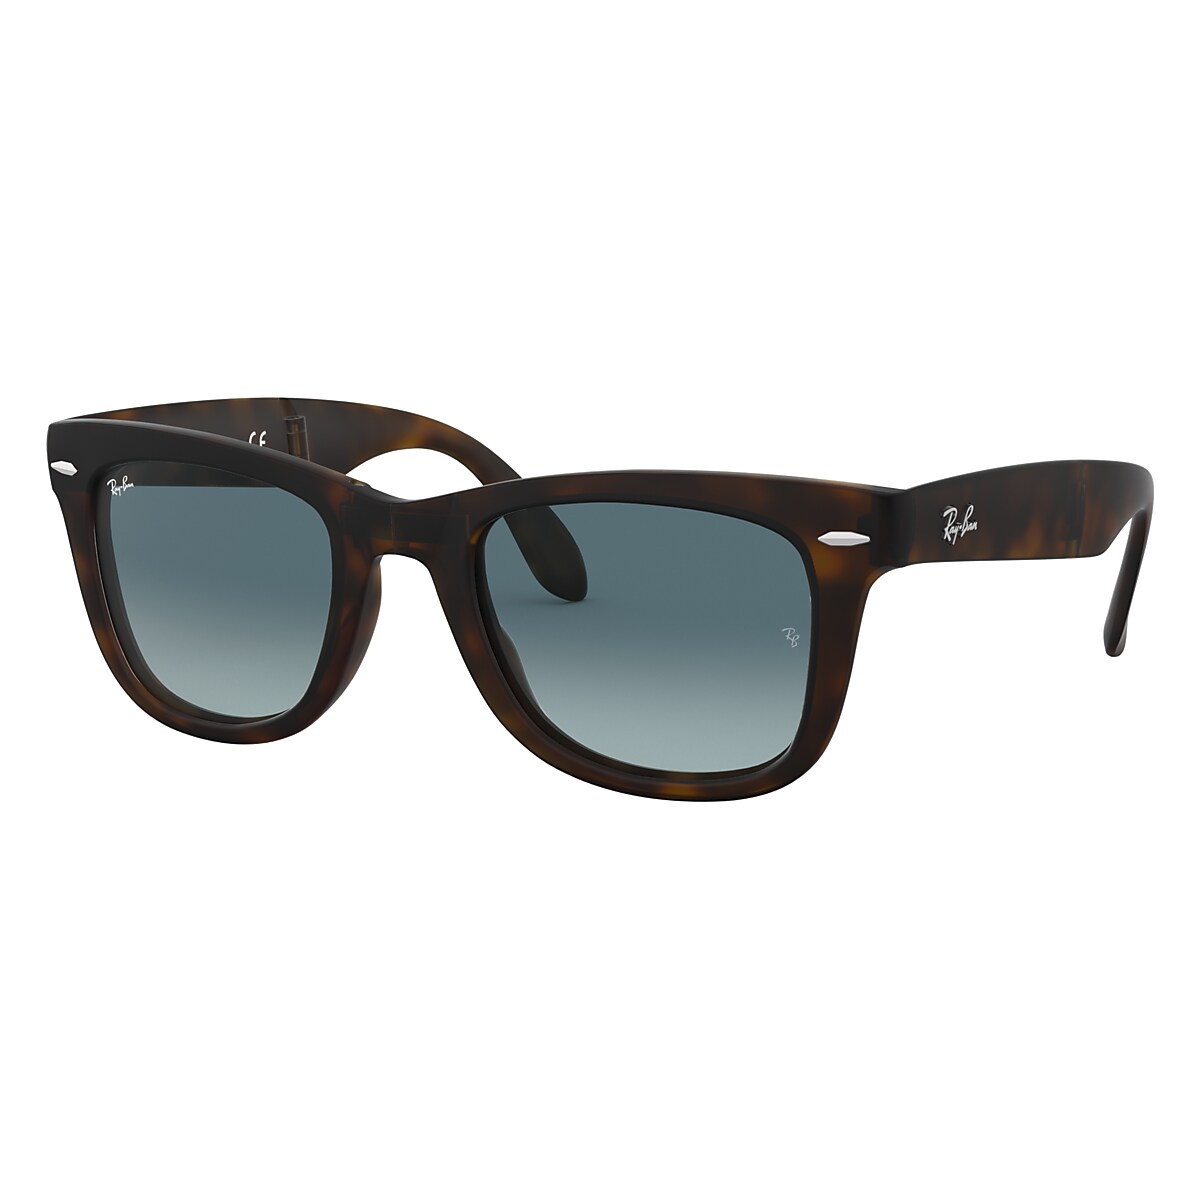 Wayfarer Folding Gradient Sunglasses in Tortoise and Blue - Ray-Ban